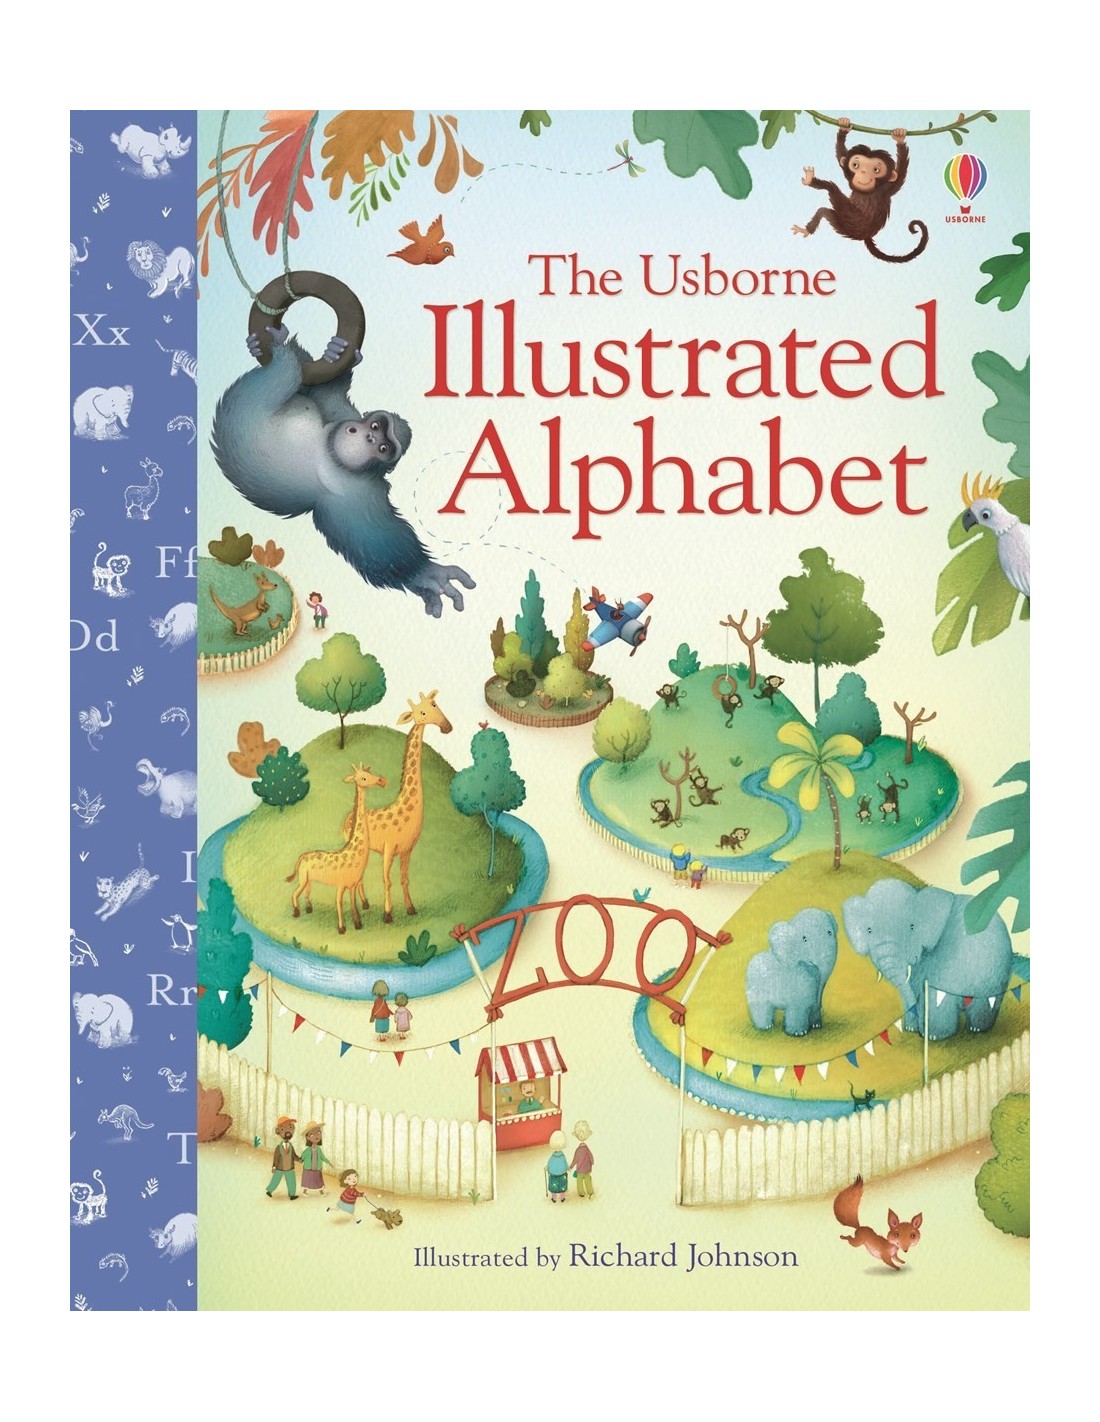 Illustrated alphabet